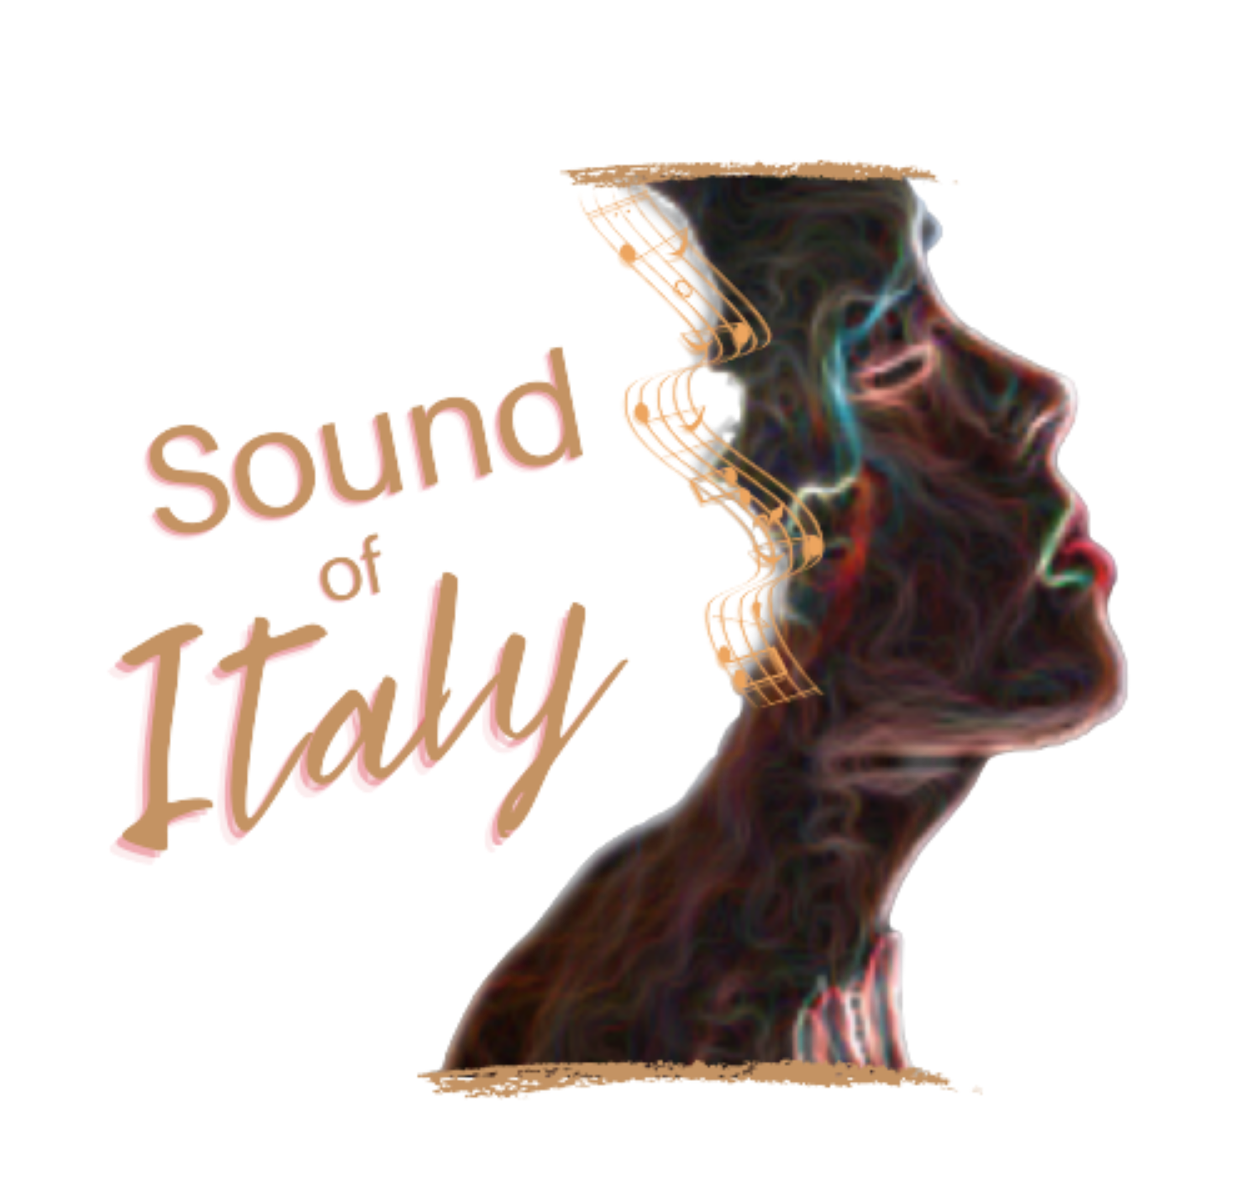 Sound of Italy